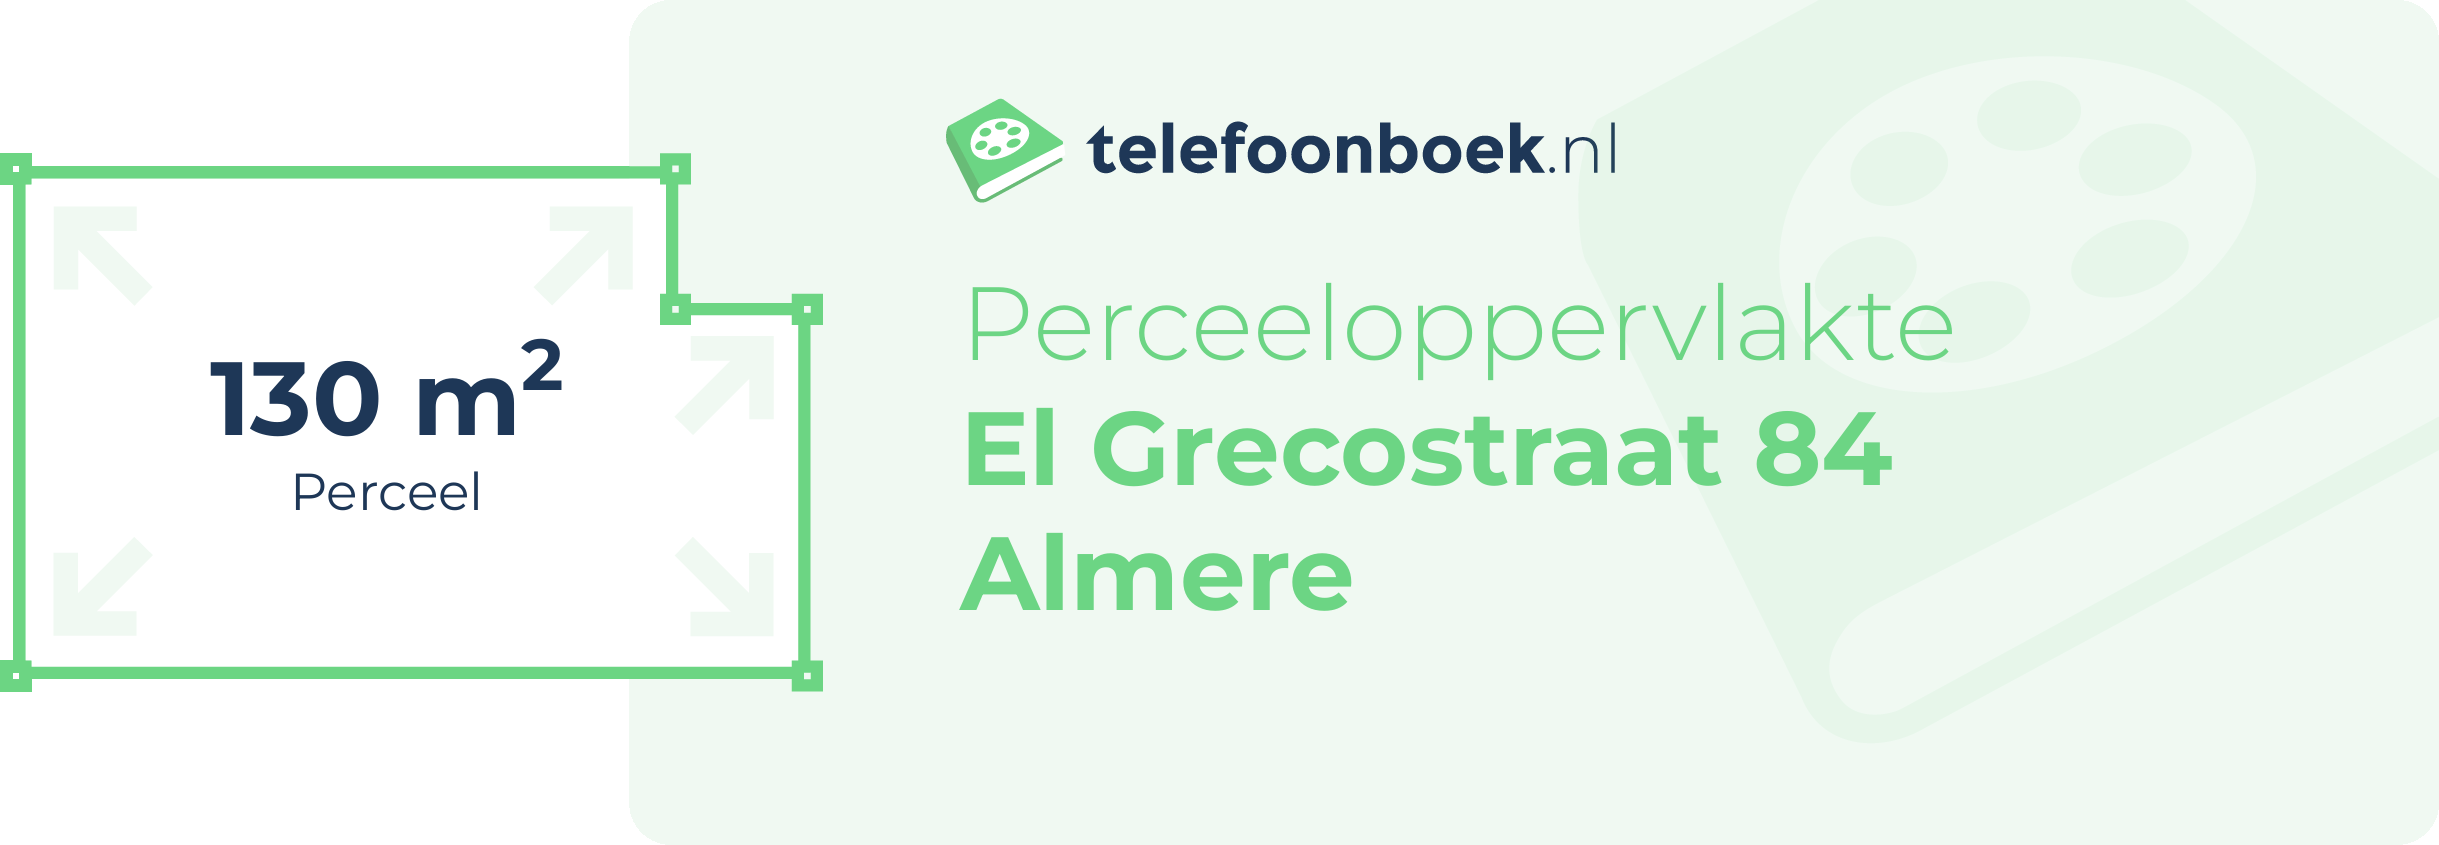 Perceeloppervlakte El Grecostraat 84 Almere